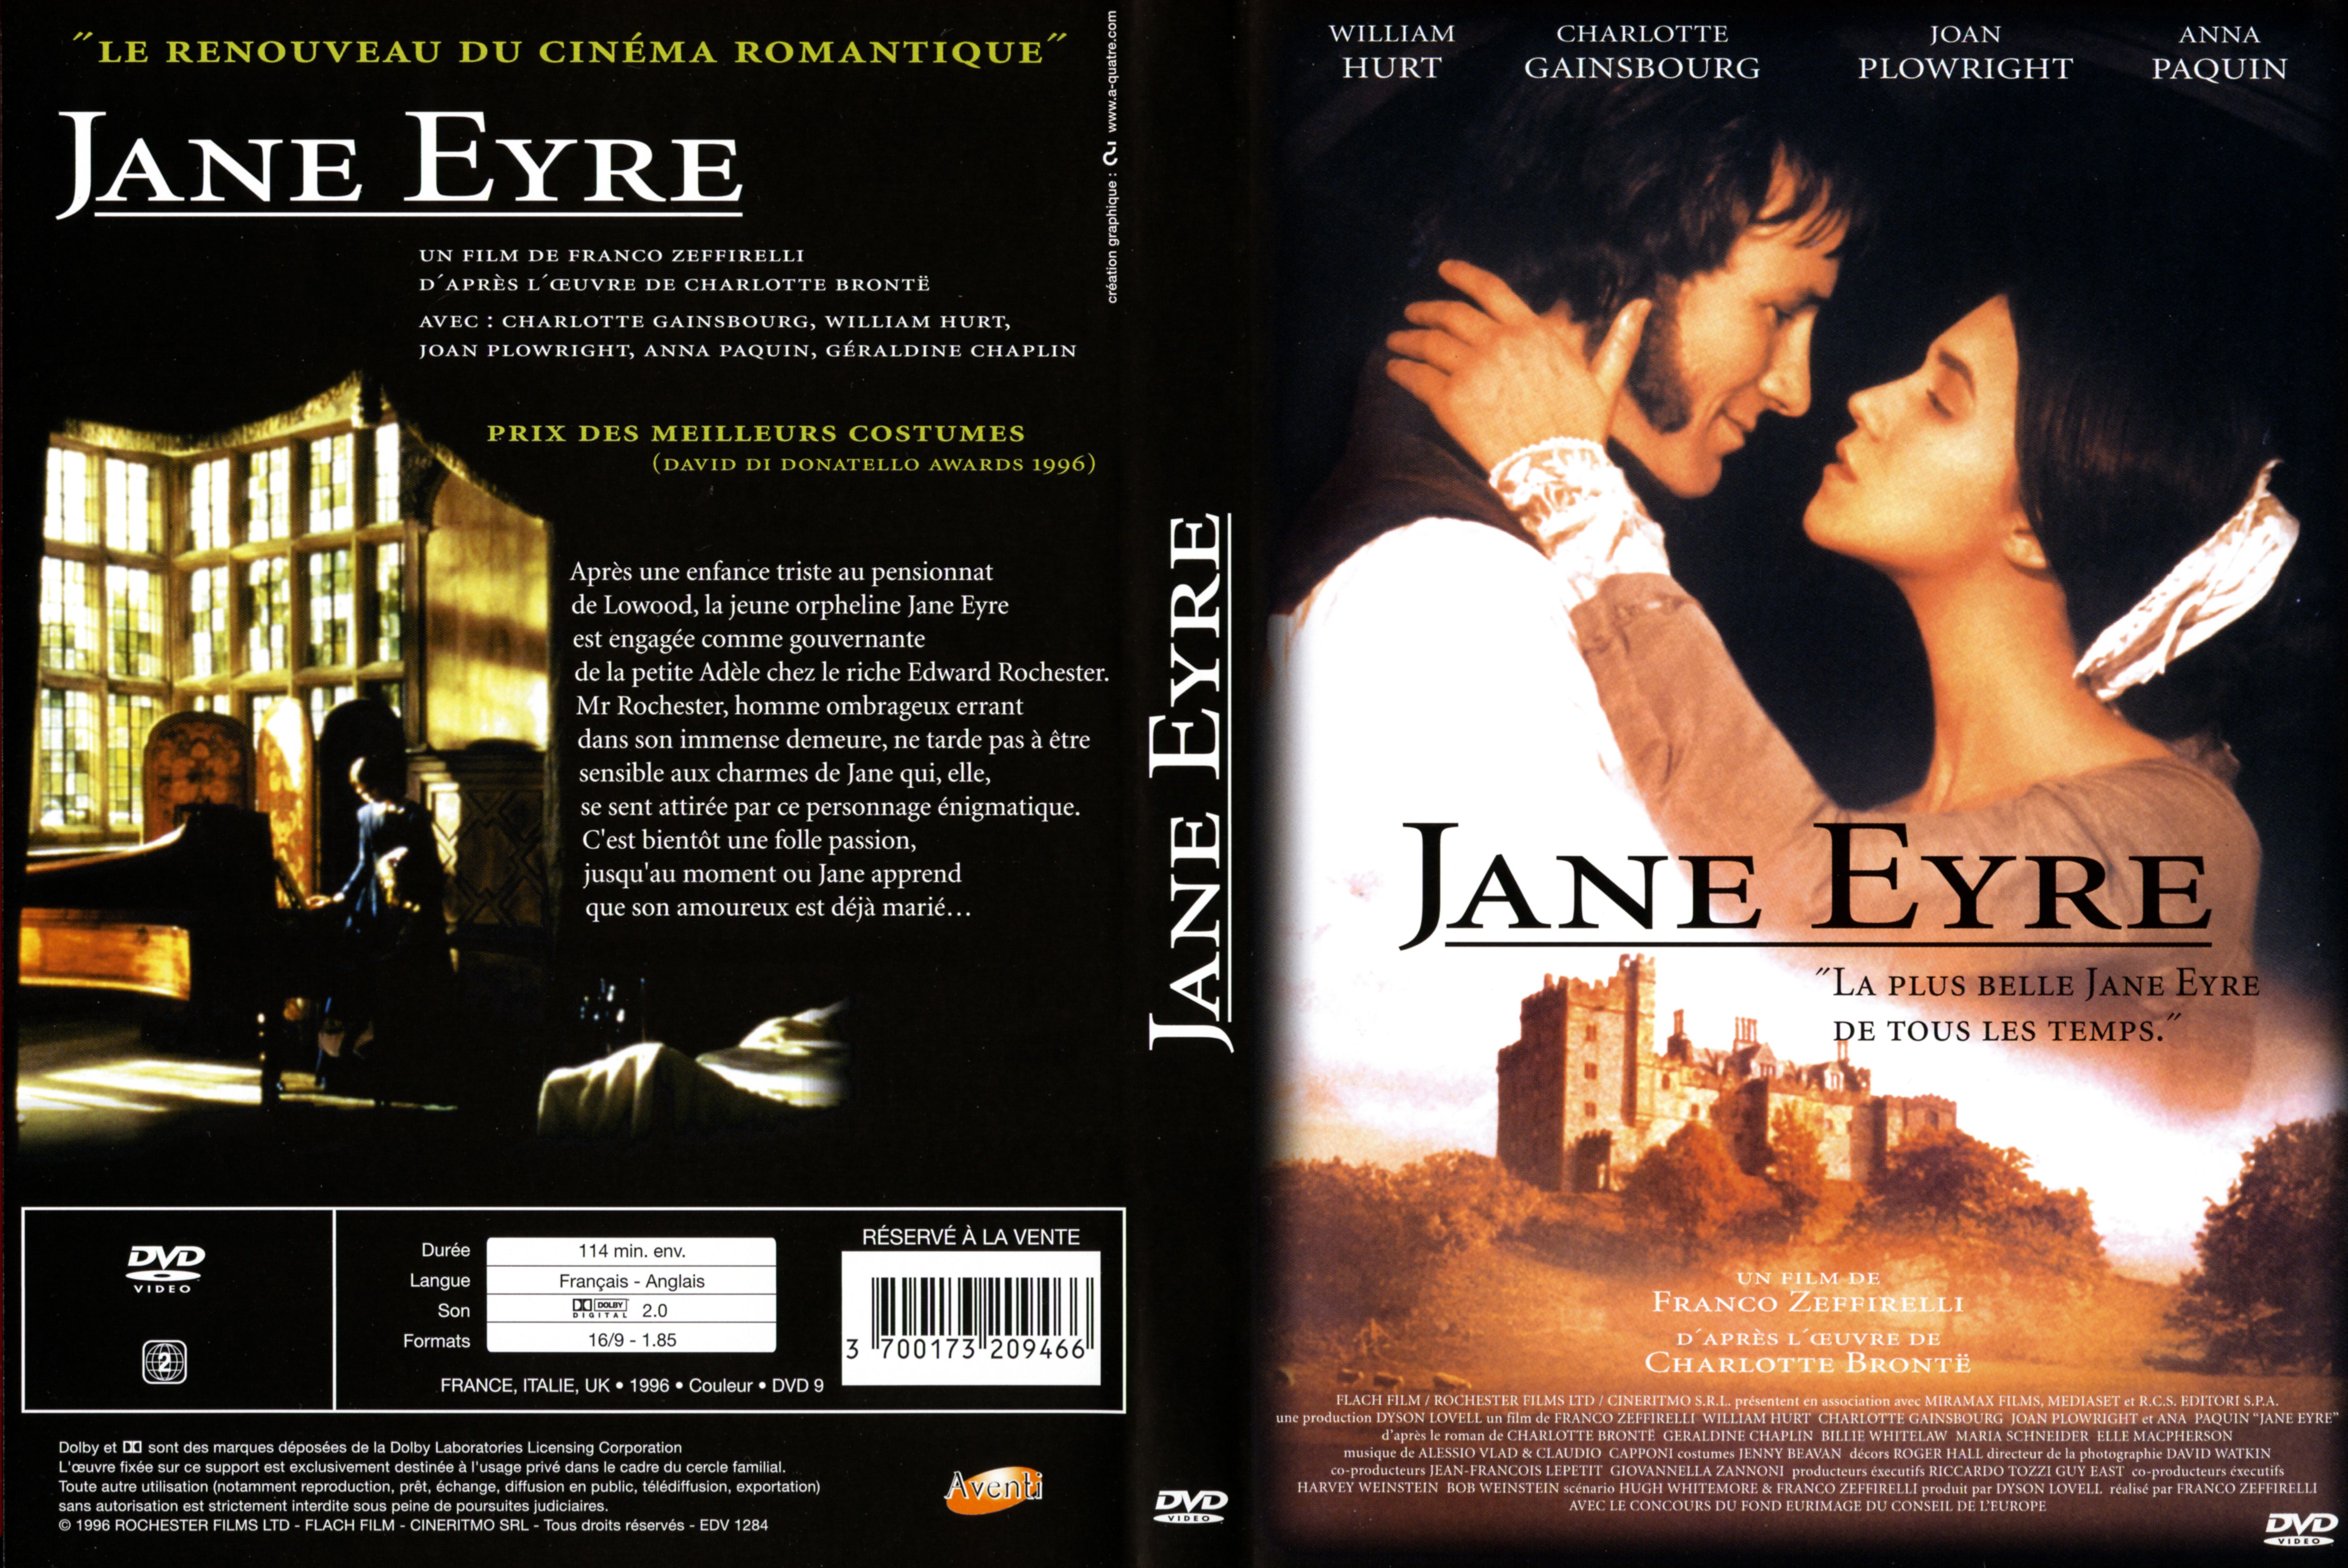 Jaquette DVD Jane Eyre